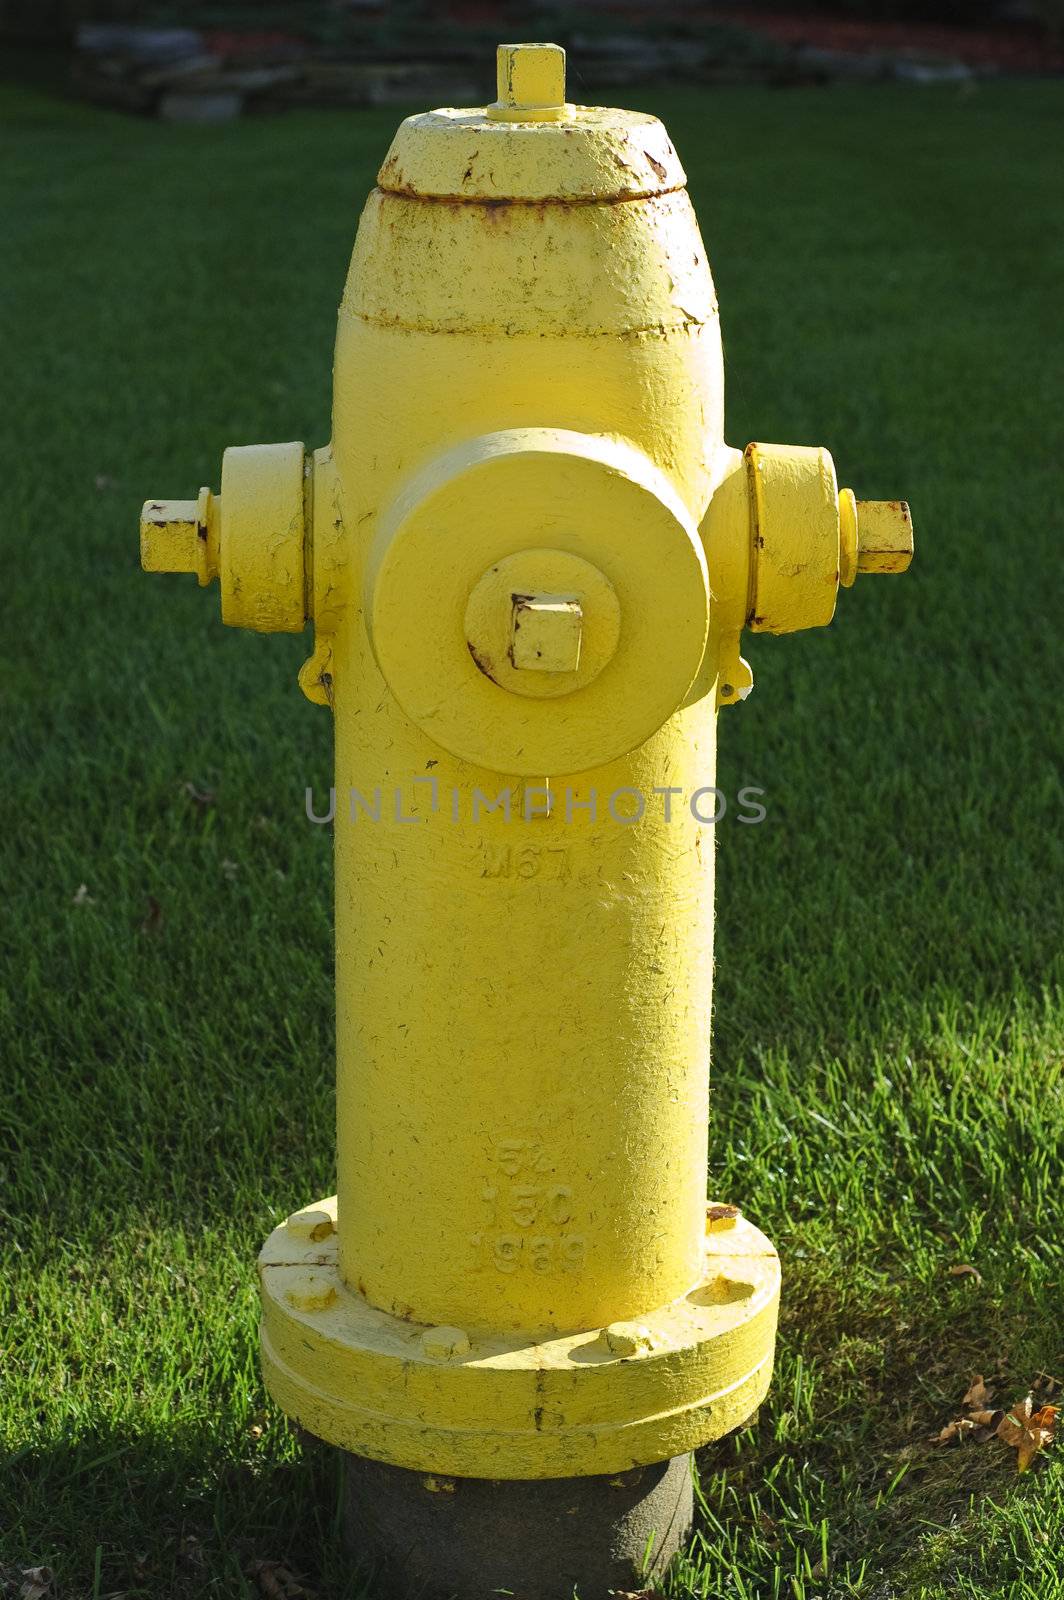 Yellow fire hydrant in public lawn